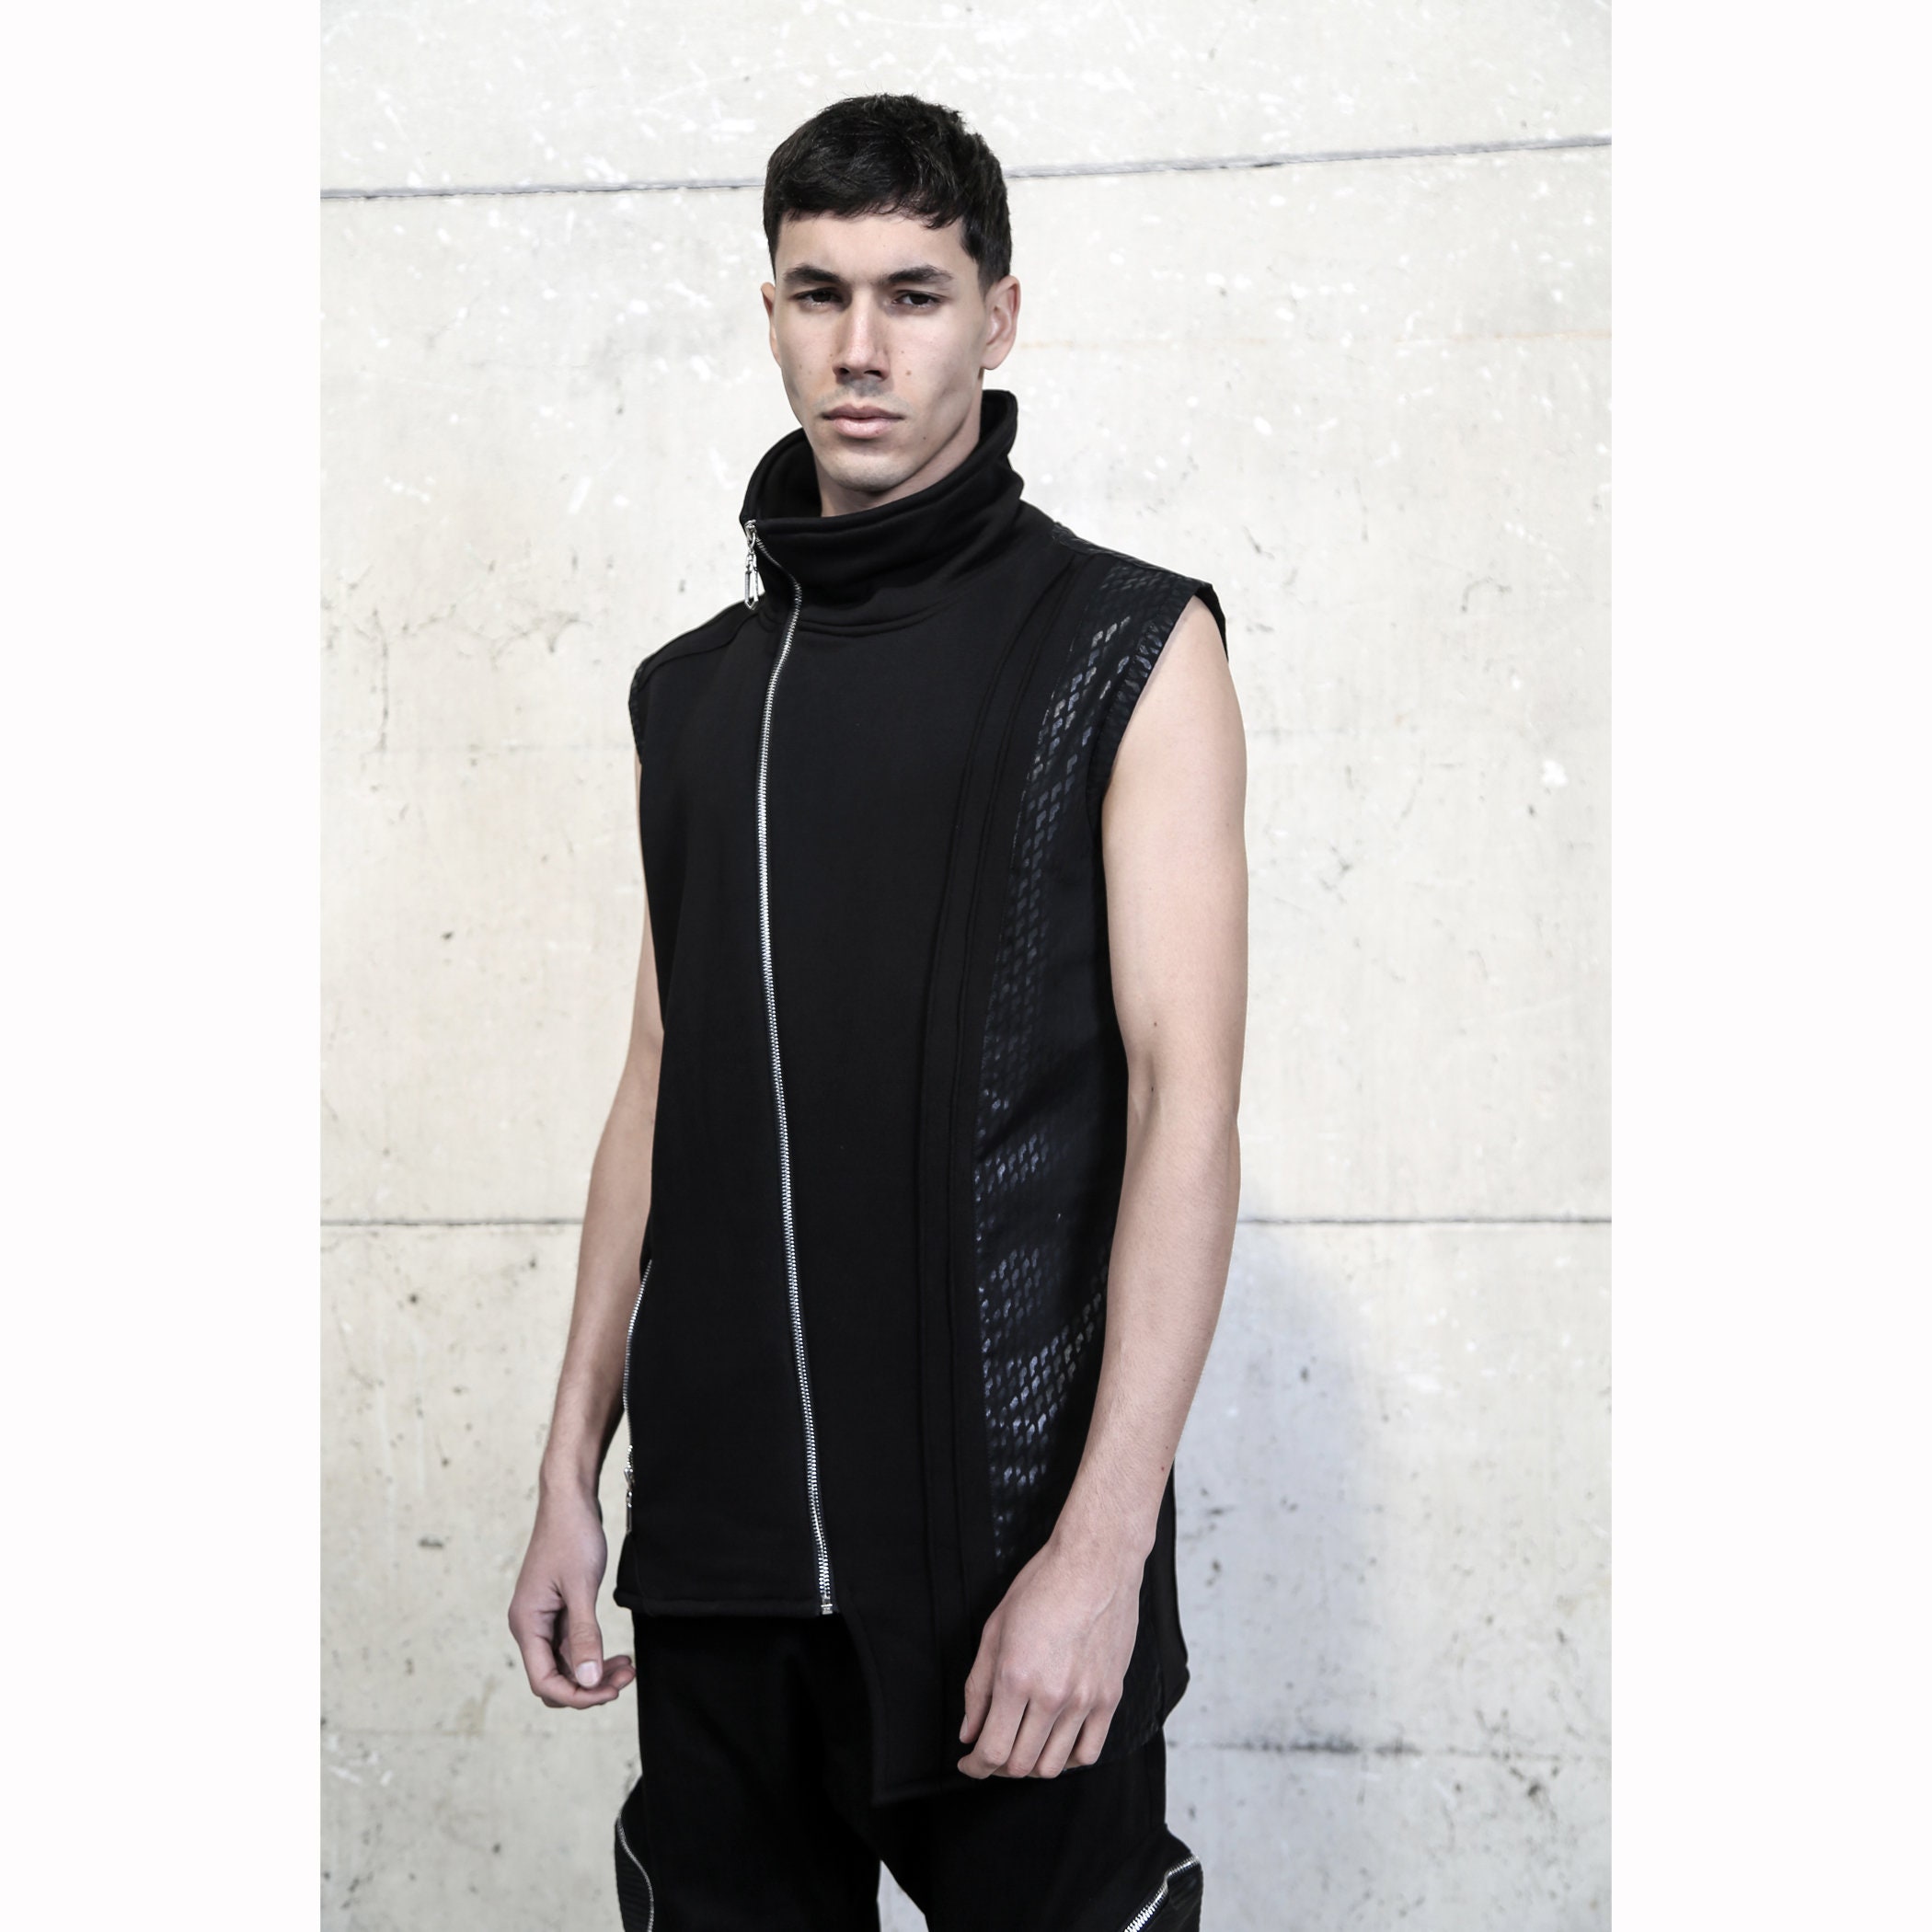 Buy Slak Jacket black Vest-avantgarde-street Men Fashion-black Men  Clothing-unique Men Fashion-dystopian-cyberpunk-futuristic Clothing Online  in India 